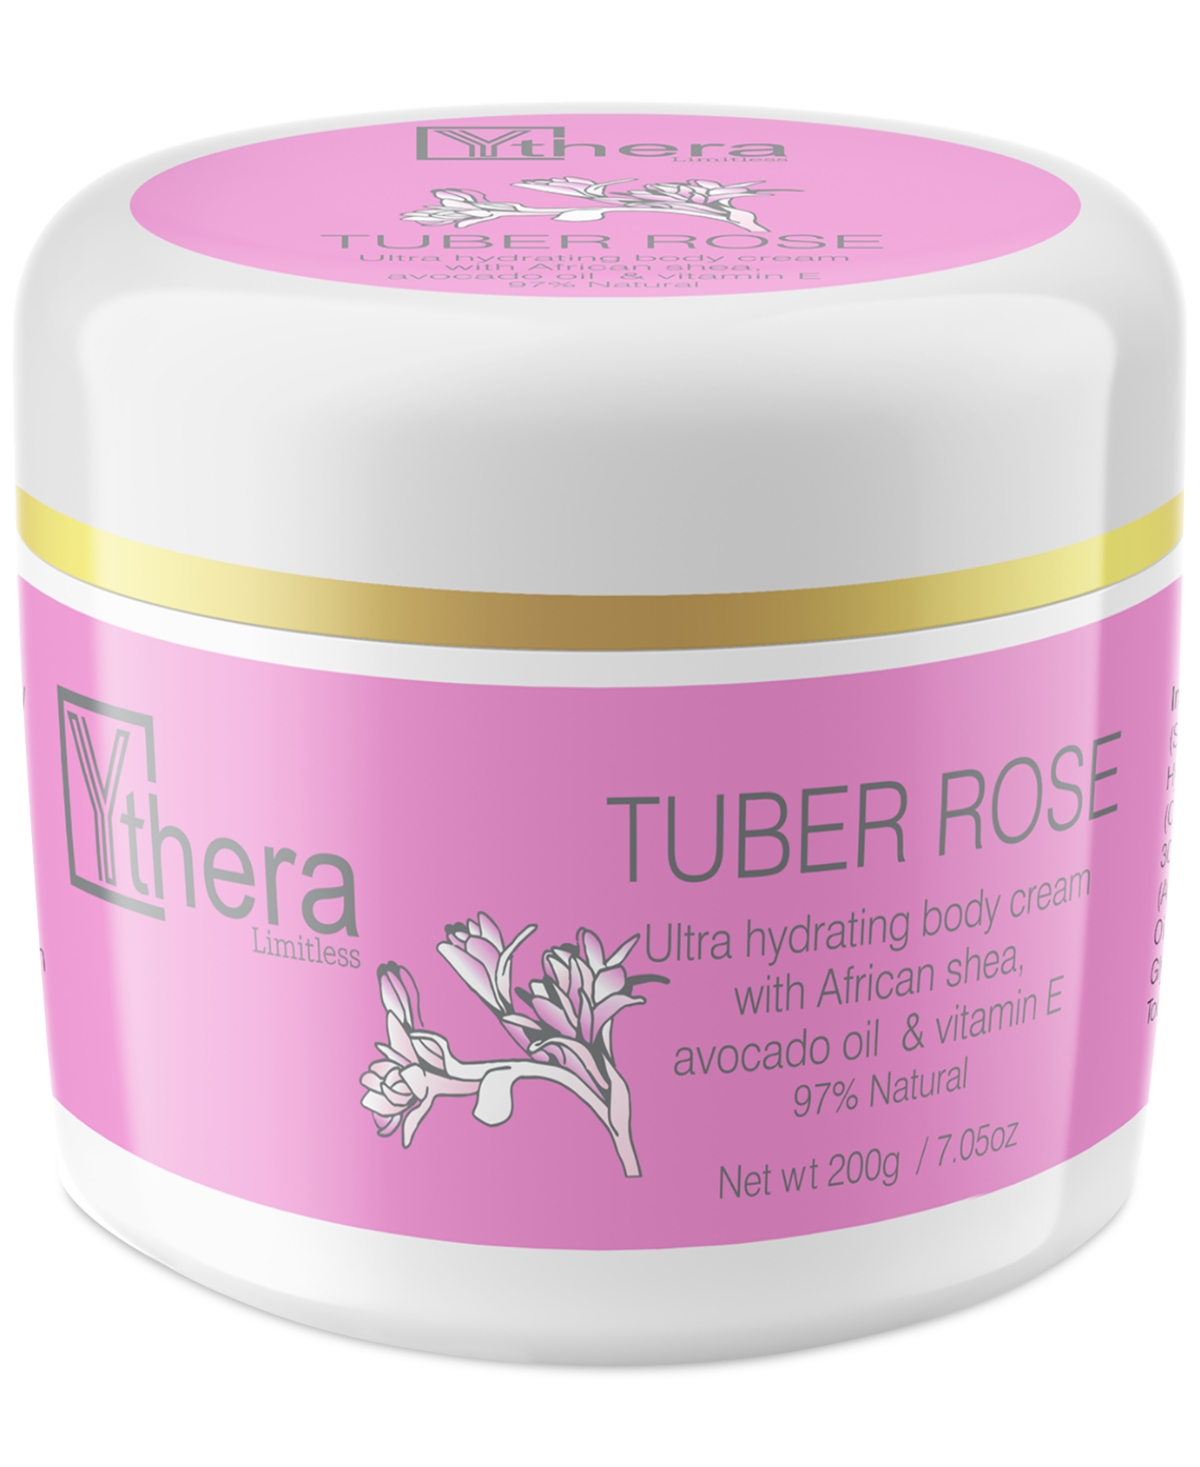 Tuber Rose Ultra Hydrating Body Cream, 7.05 oz.